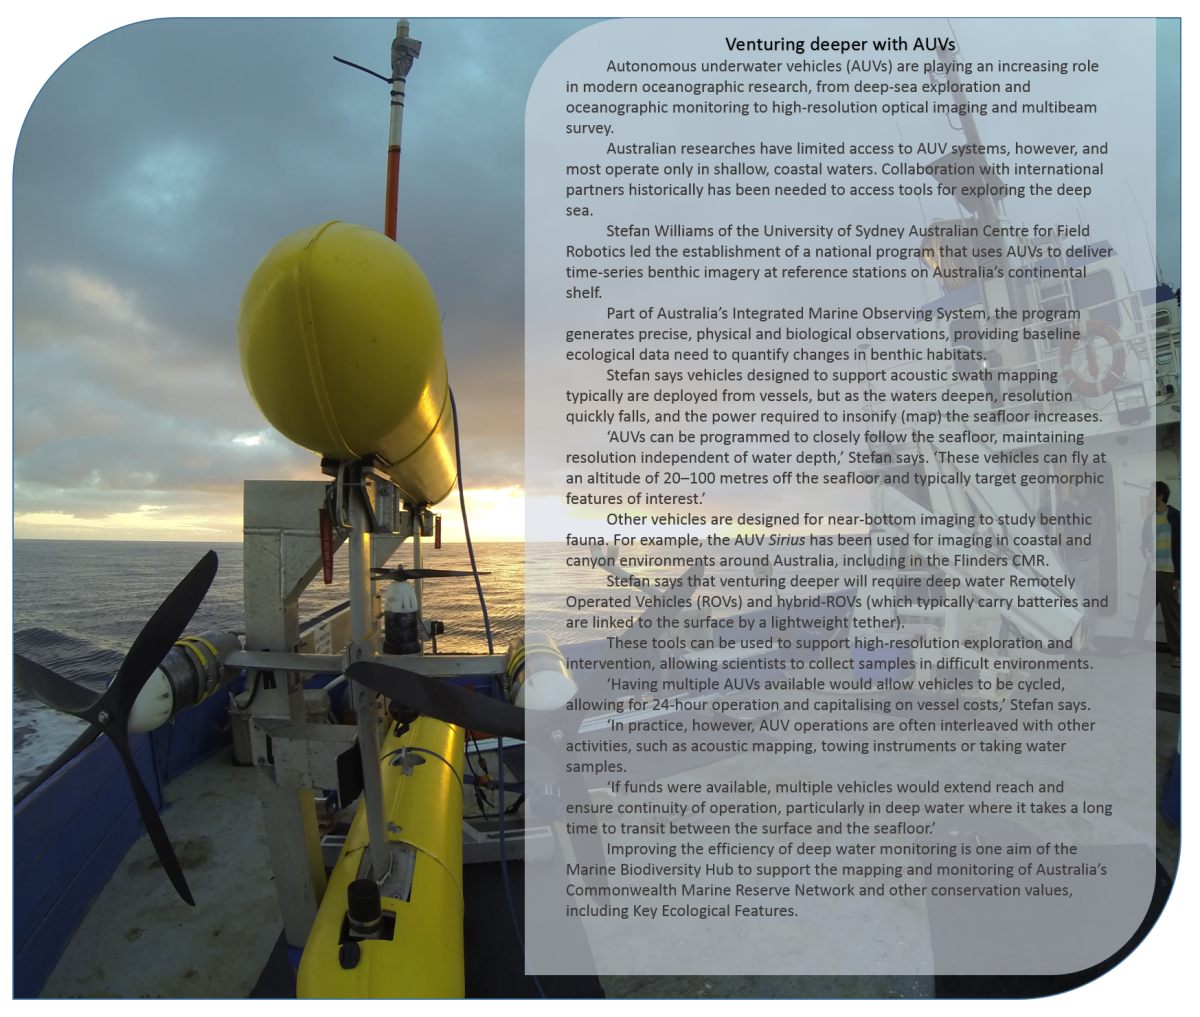 Venturing deeper with AUVs Marine Biodiversity Hub